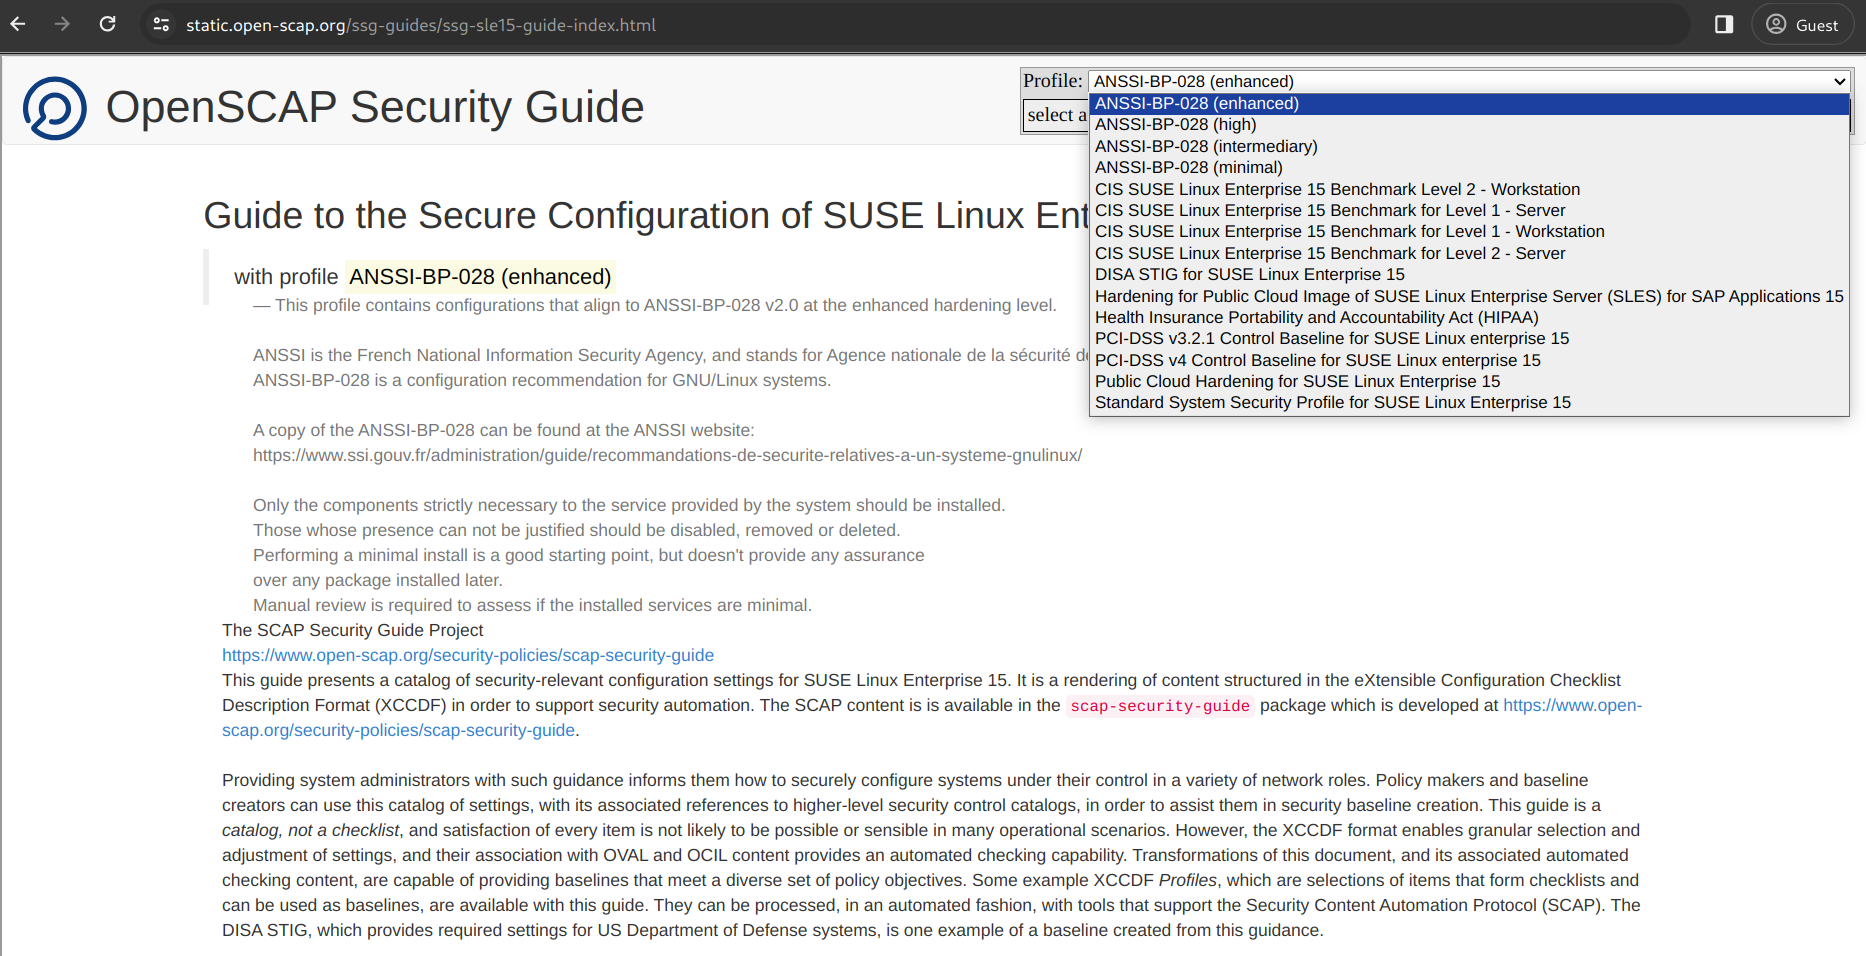 SCAP Security Guide profiles for SUSE Linux Enterprise 15